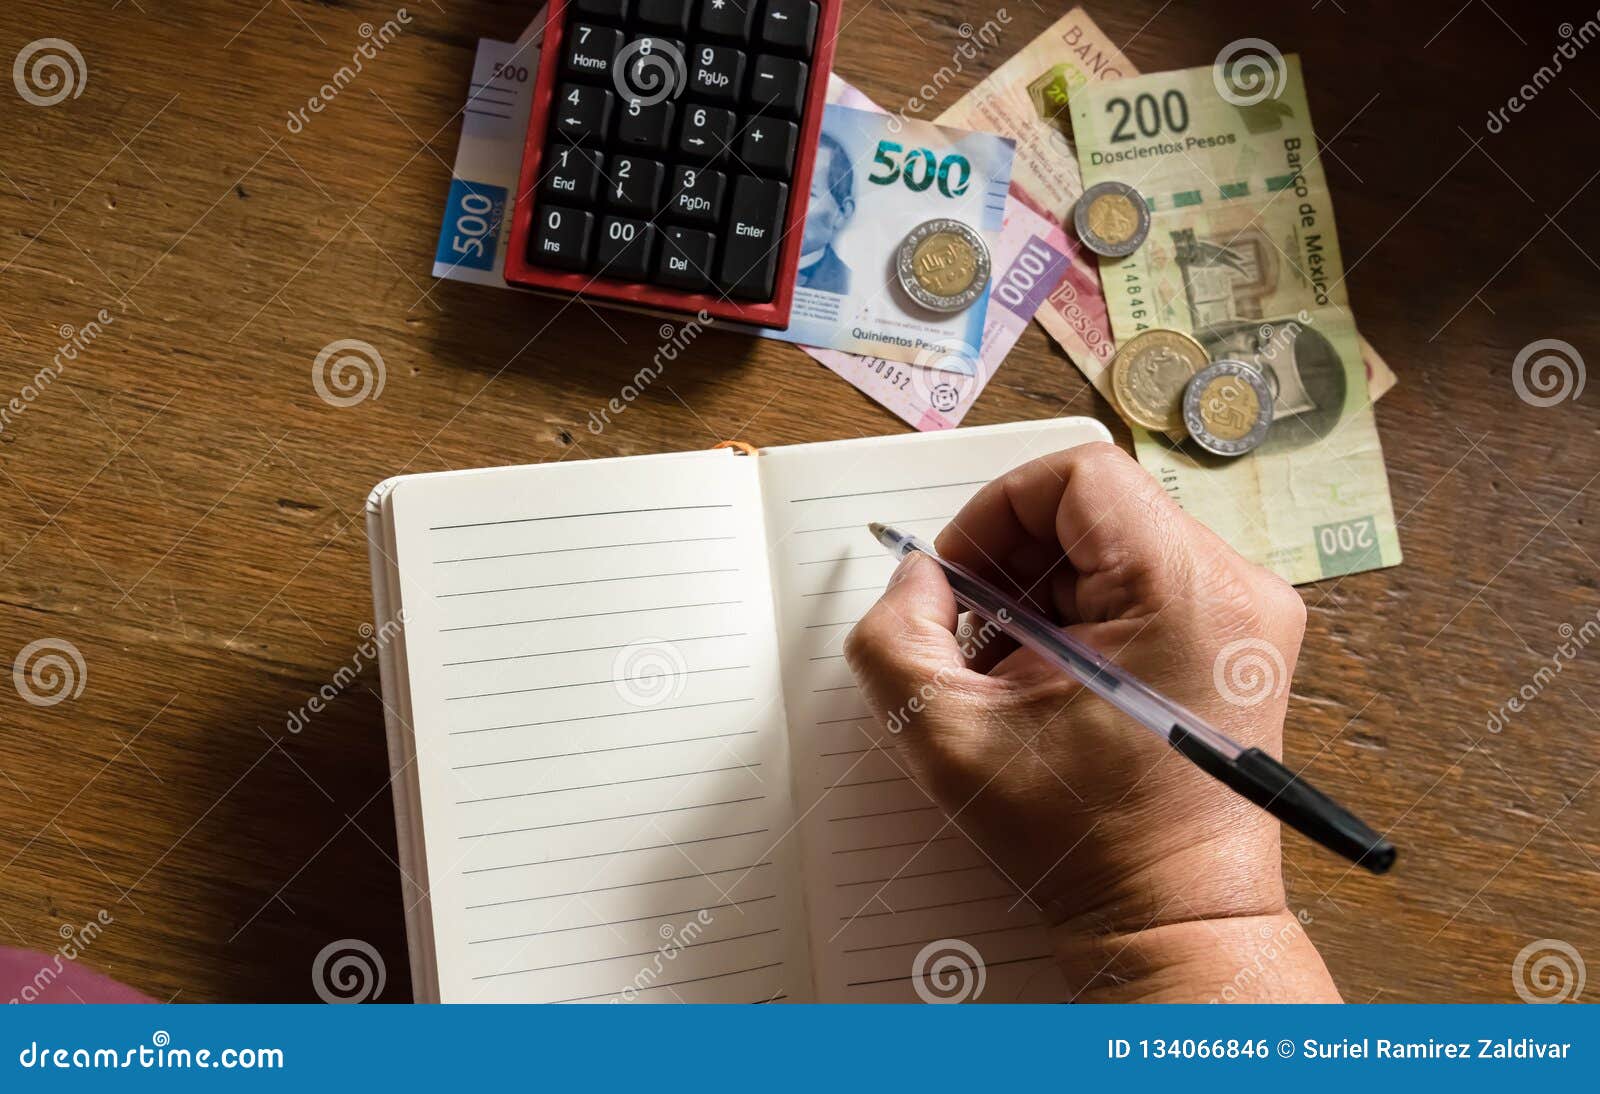 money - mexican pesos, making a budget